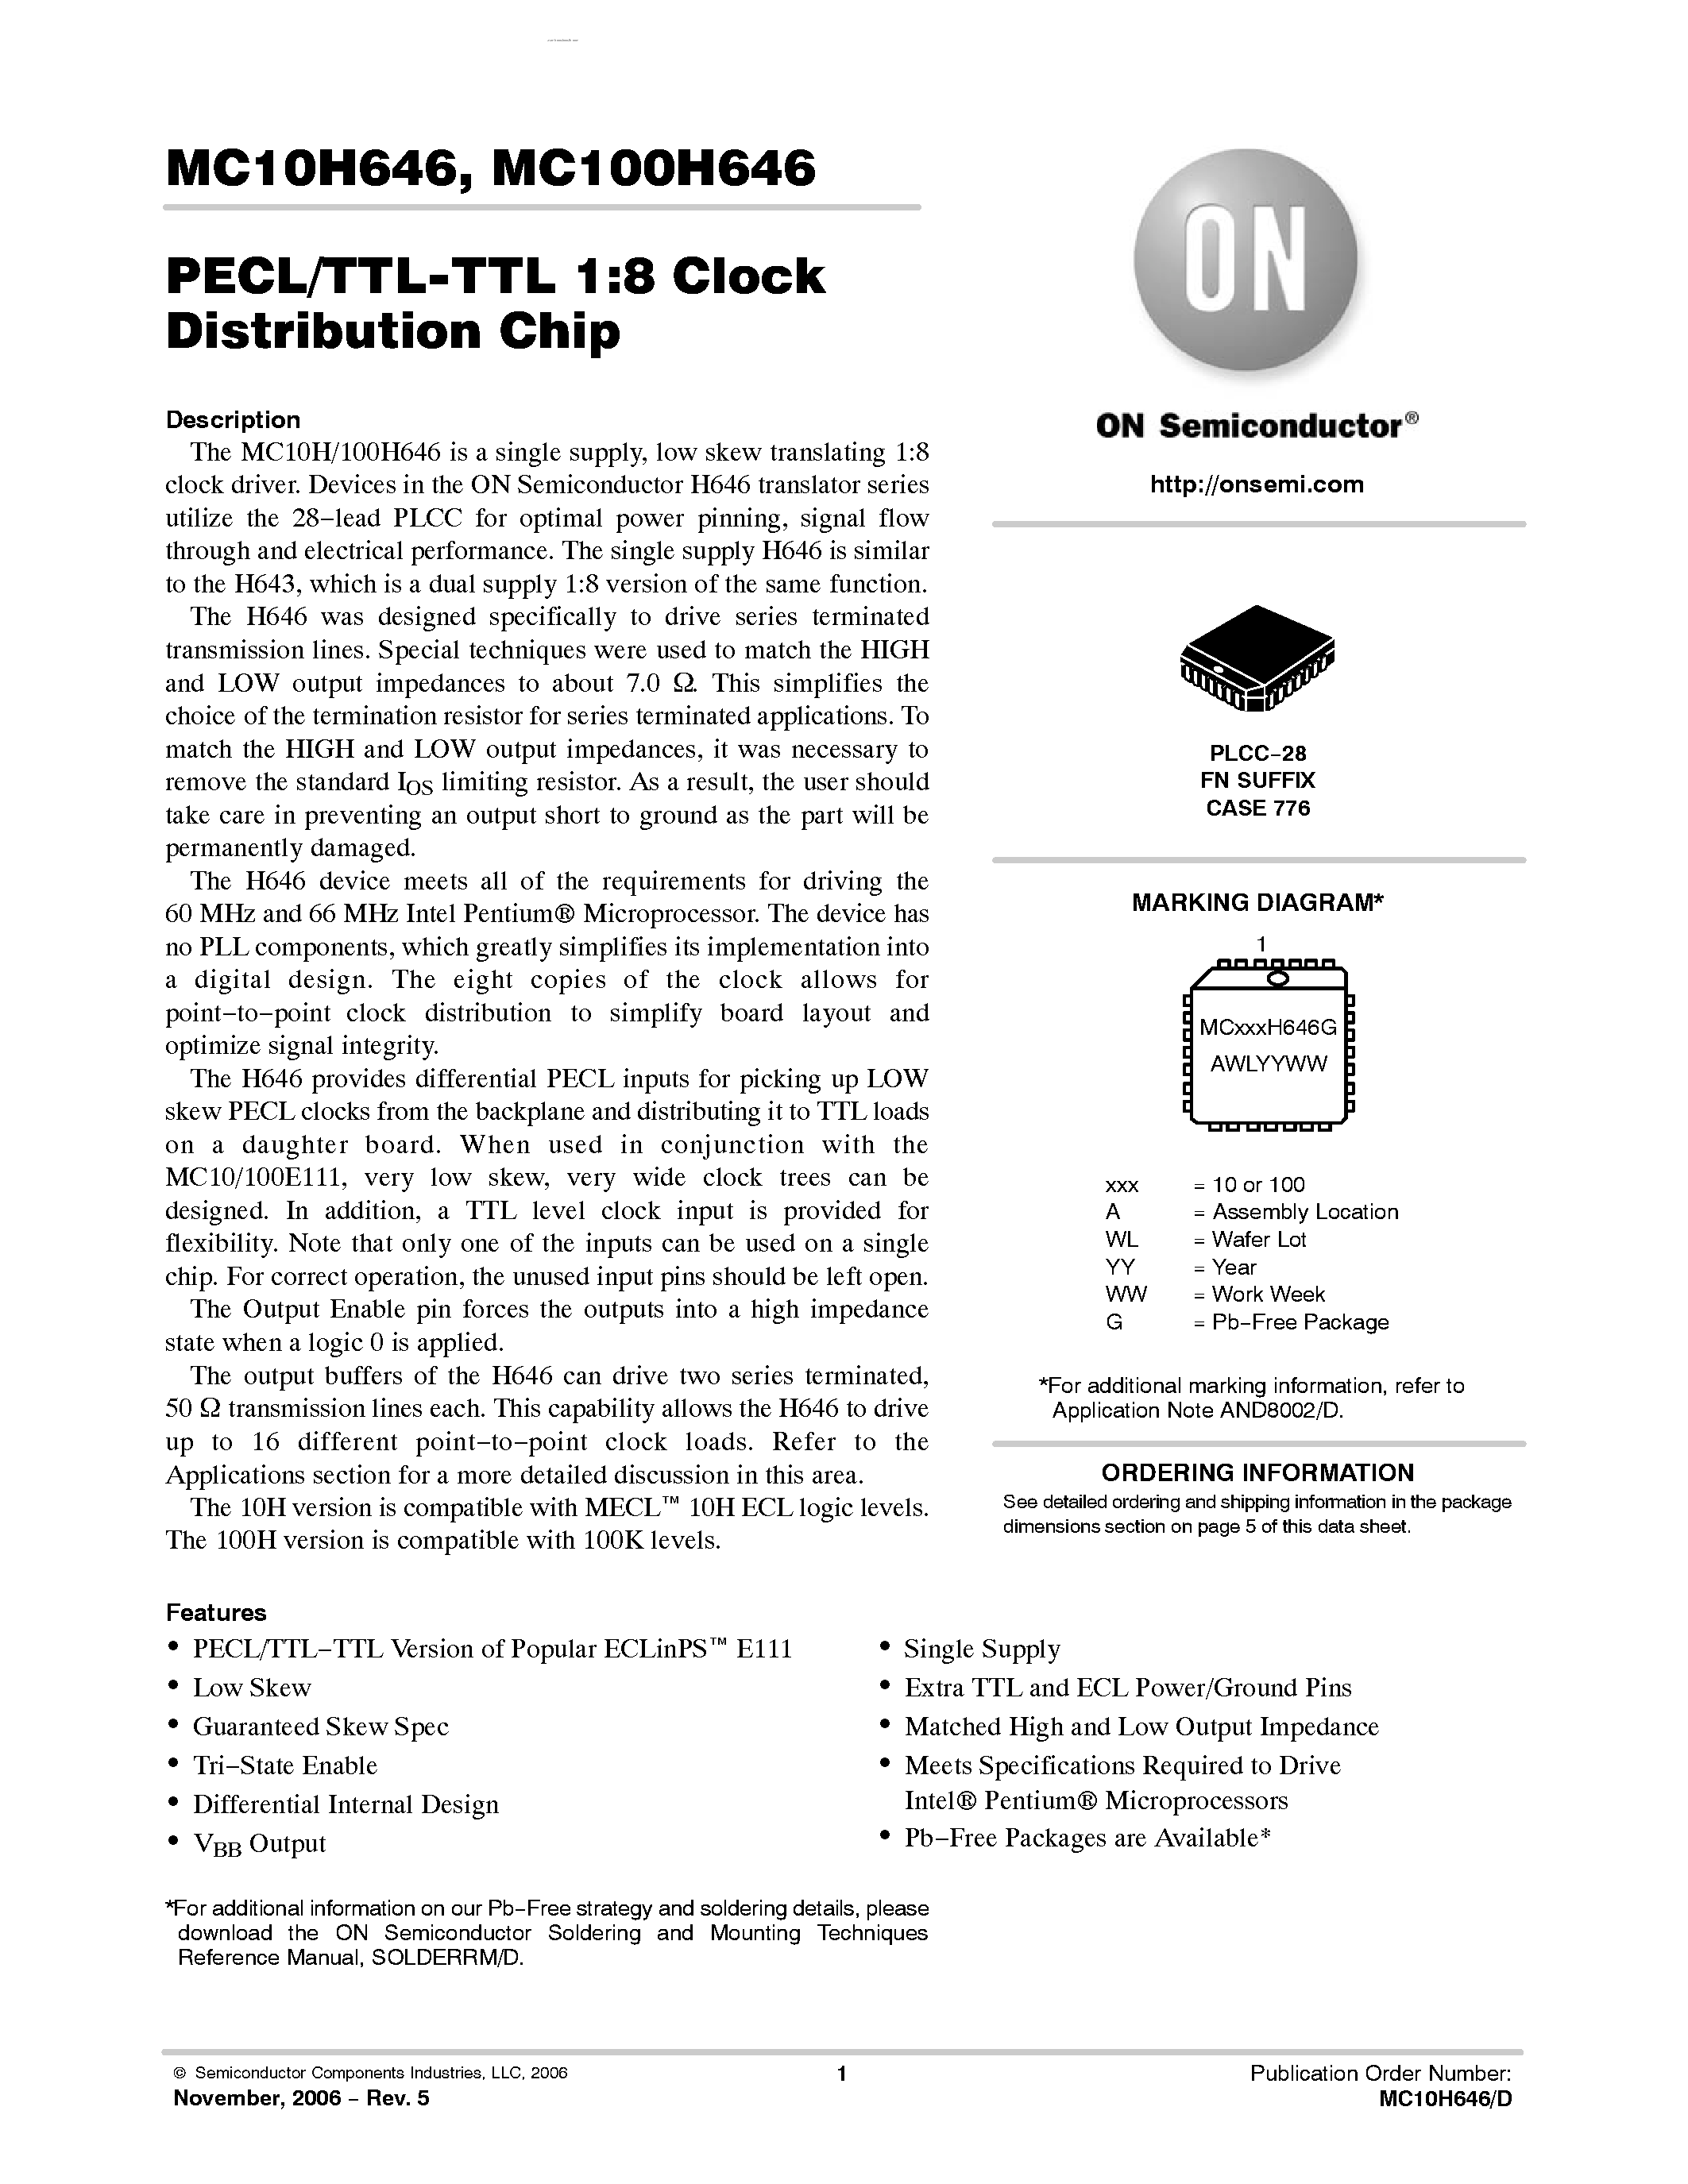 Datasheet MC100H646 - PENTIUM MICROPROCESSOR PECL/TTL-TTL CLOCK DRIVER page 1